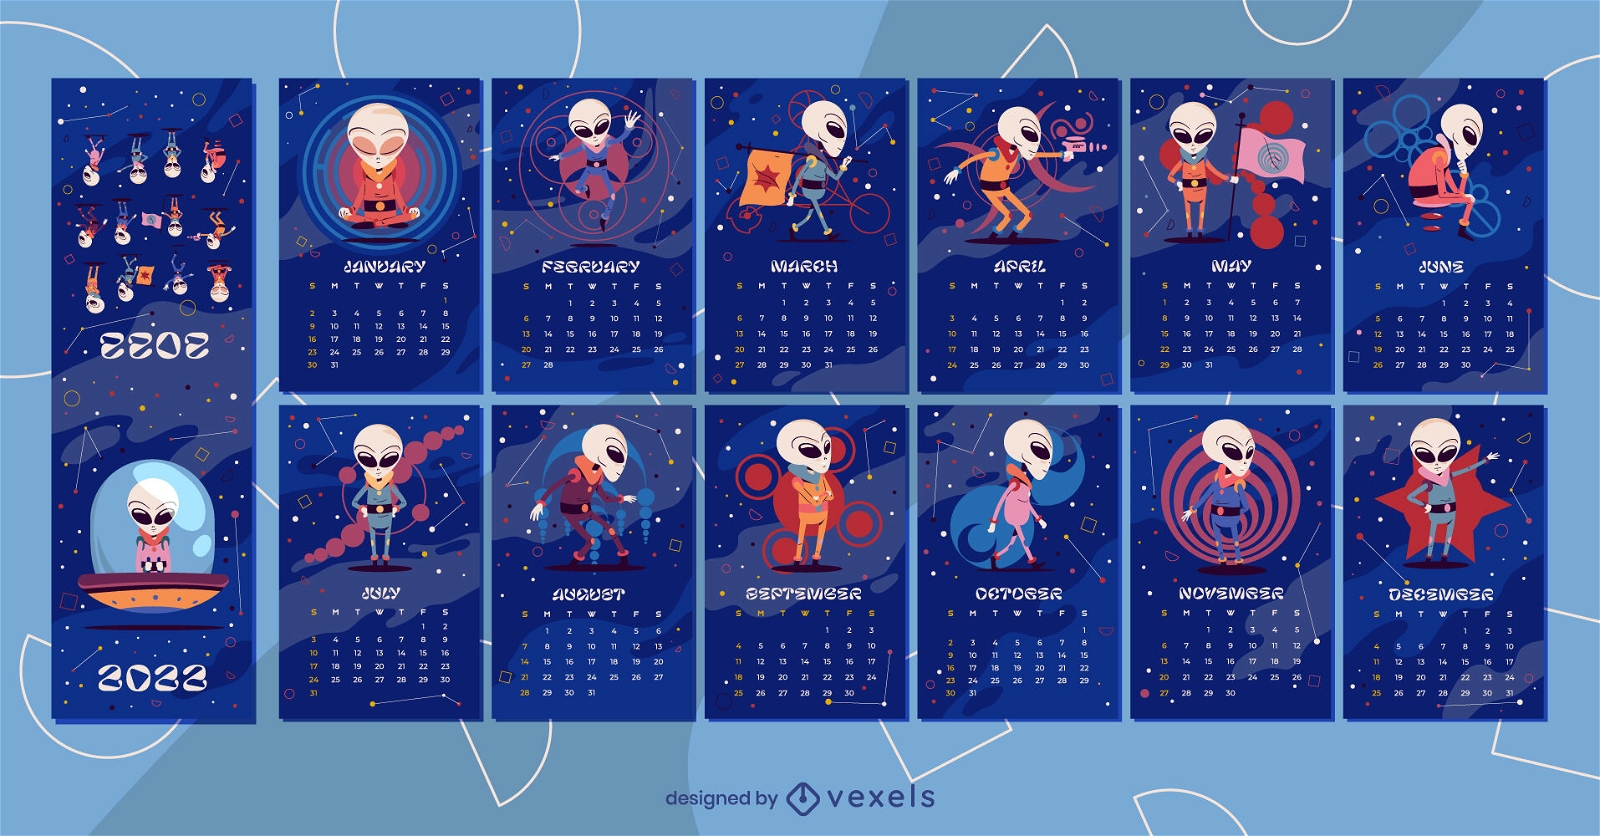 Space aliens cartoon calendar design